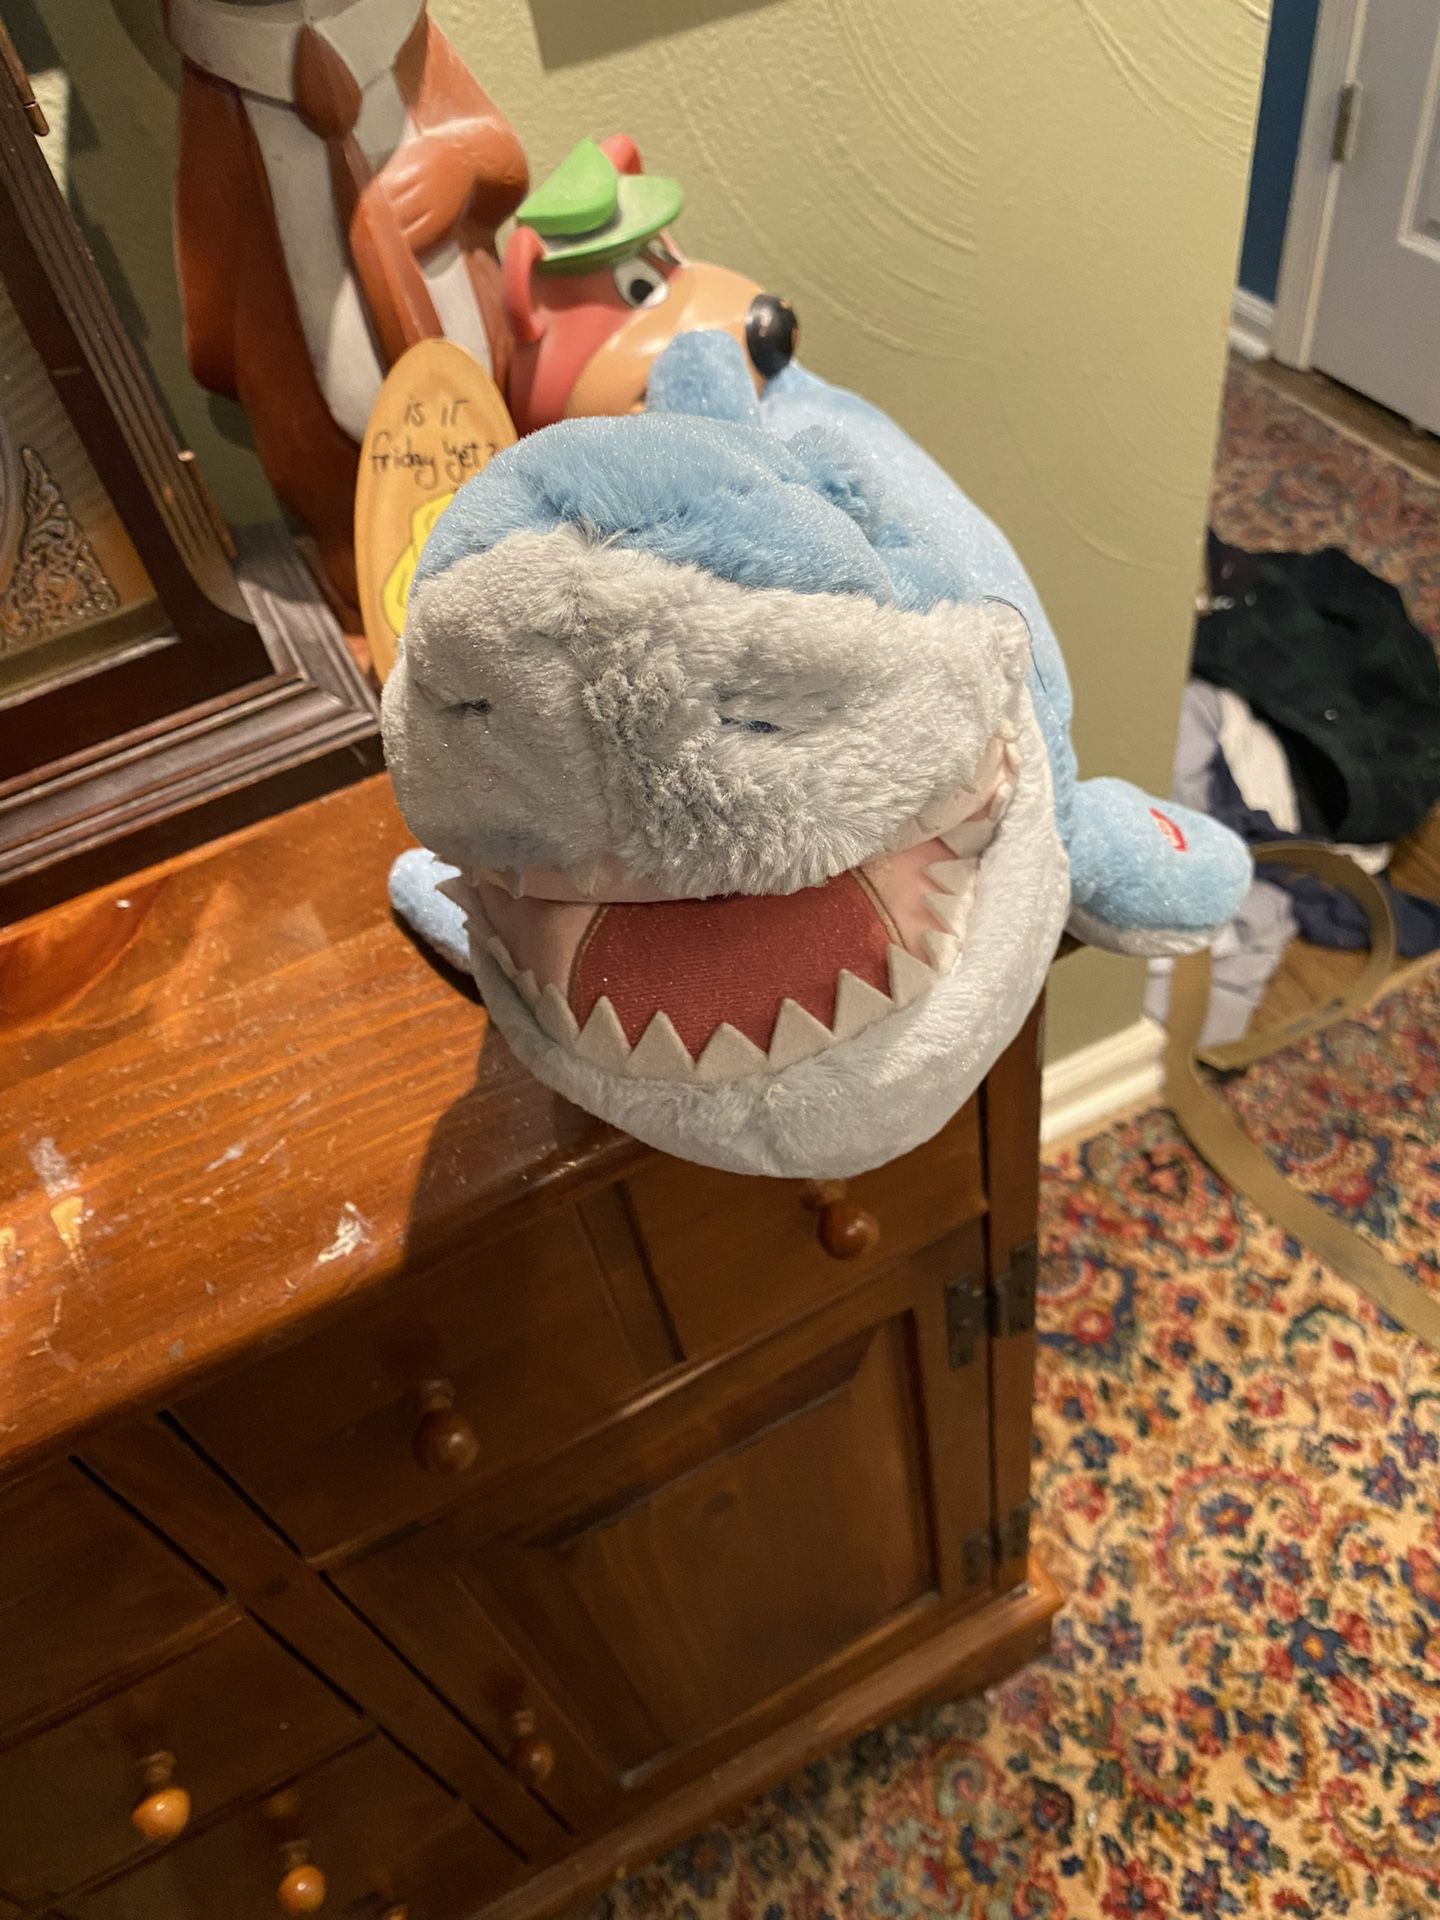 Disney Store Official Pixar Finding Nemo 19 Inch Talking Bruce Shark Plush Toy